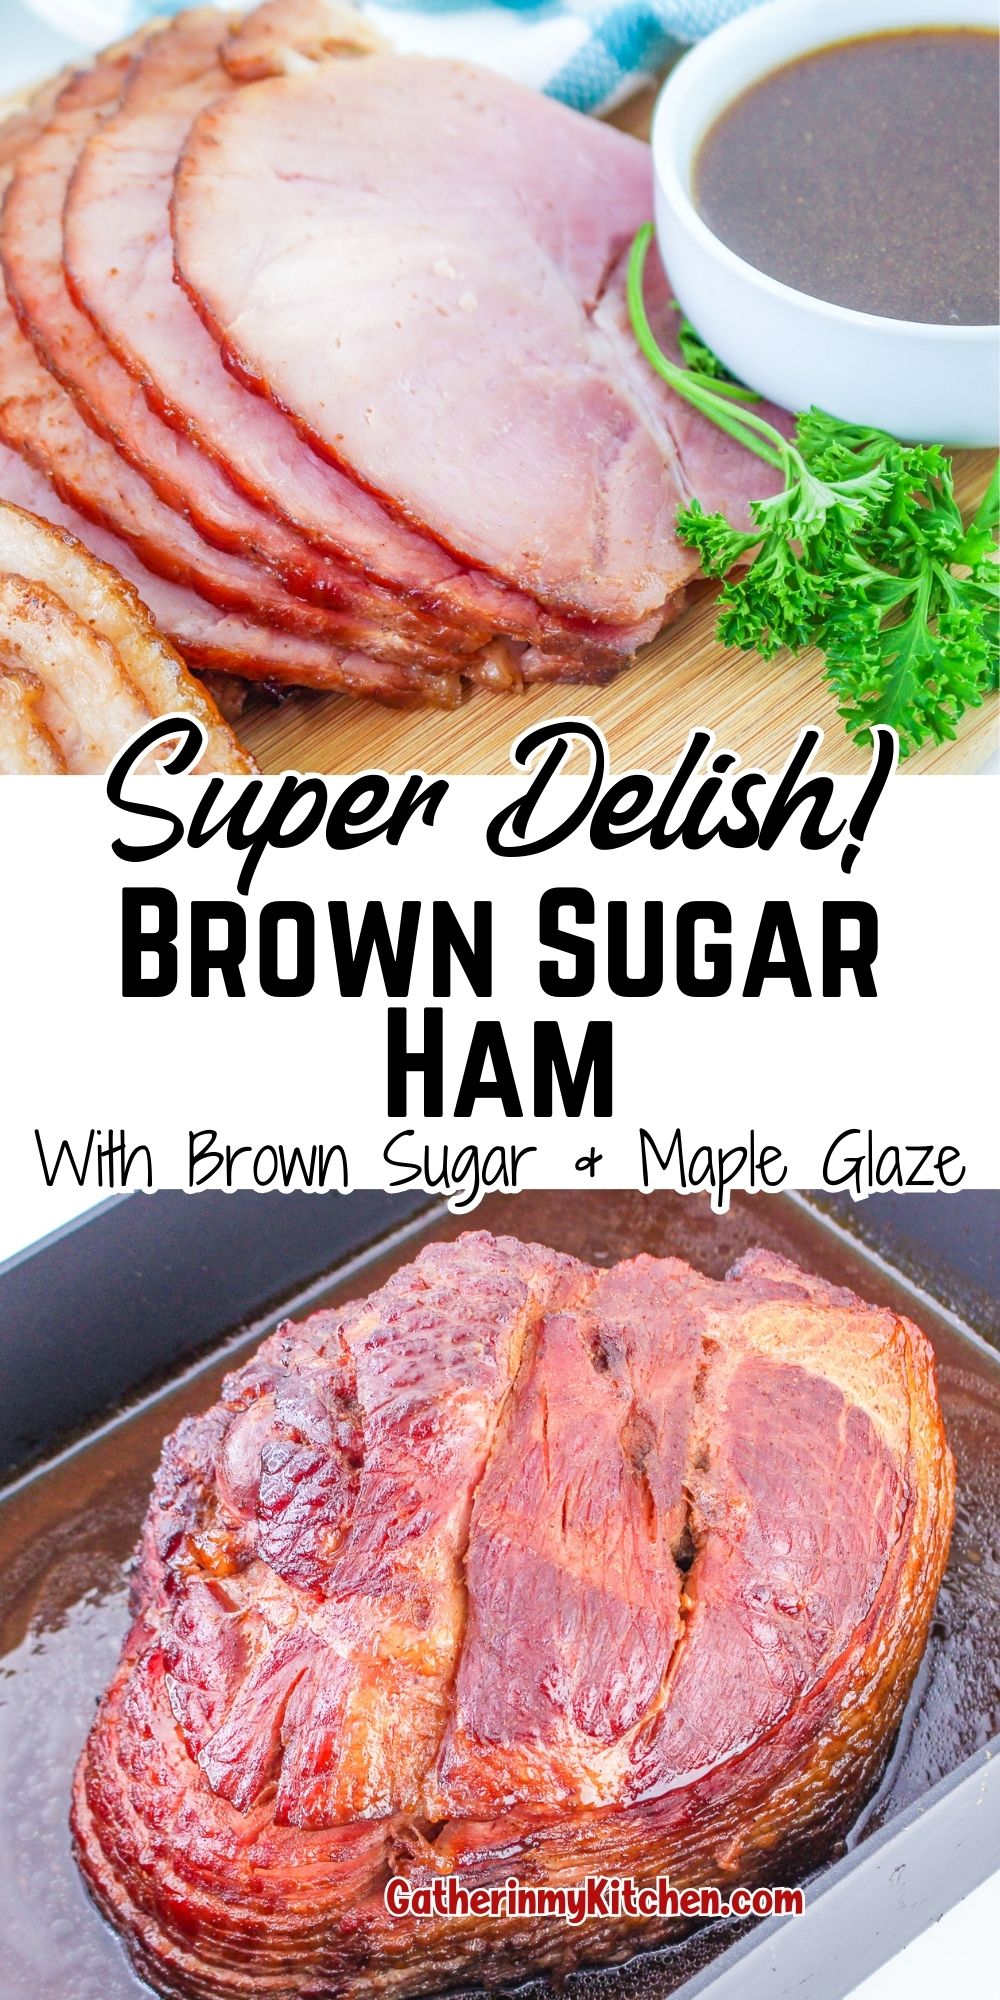 Pin image: top and bottom pics of ham, middle says "Super Delish! Brown Sugar Ham".